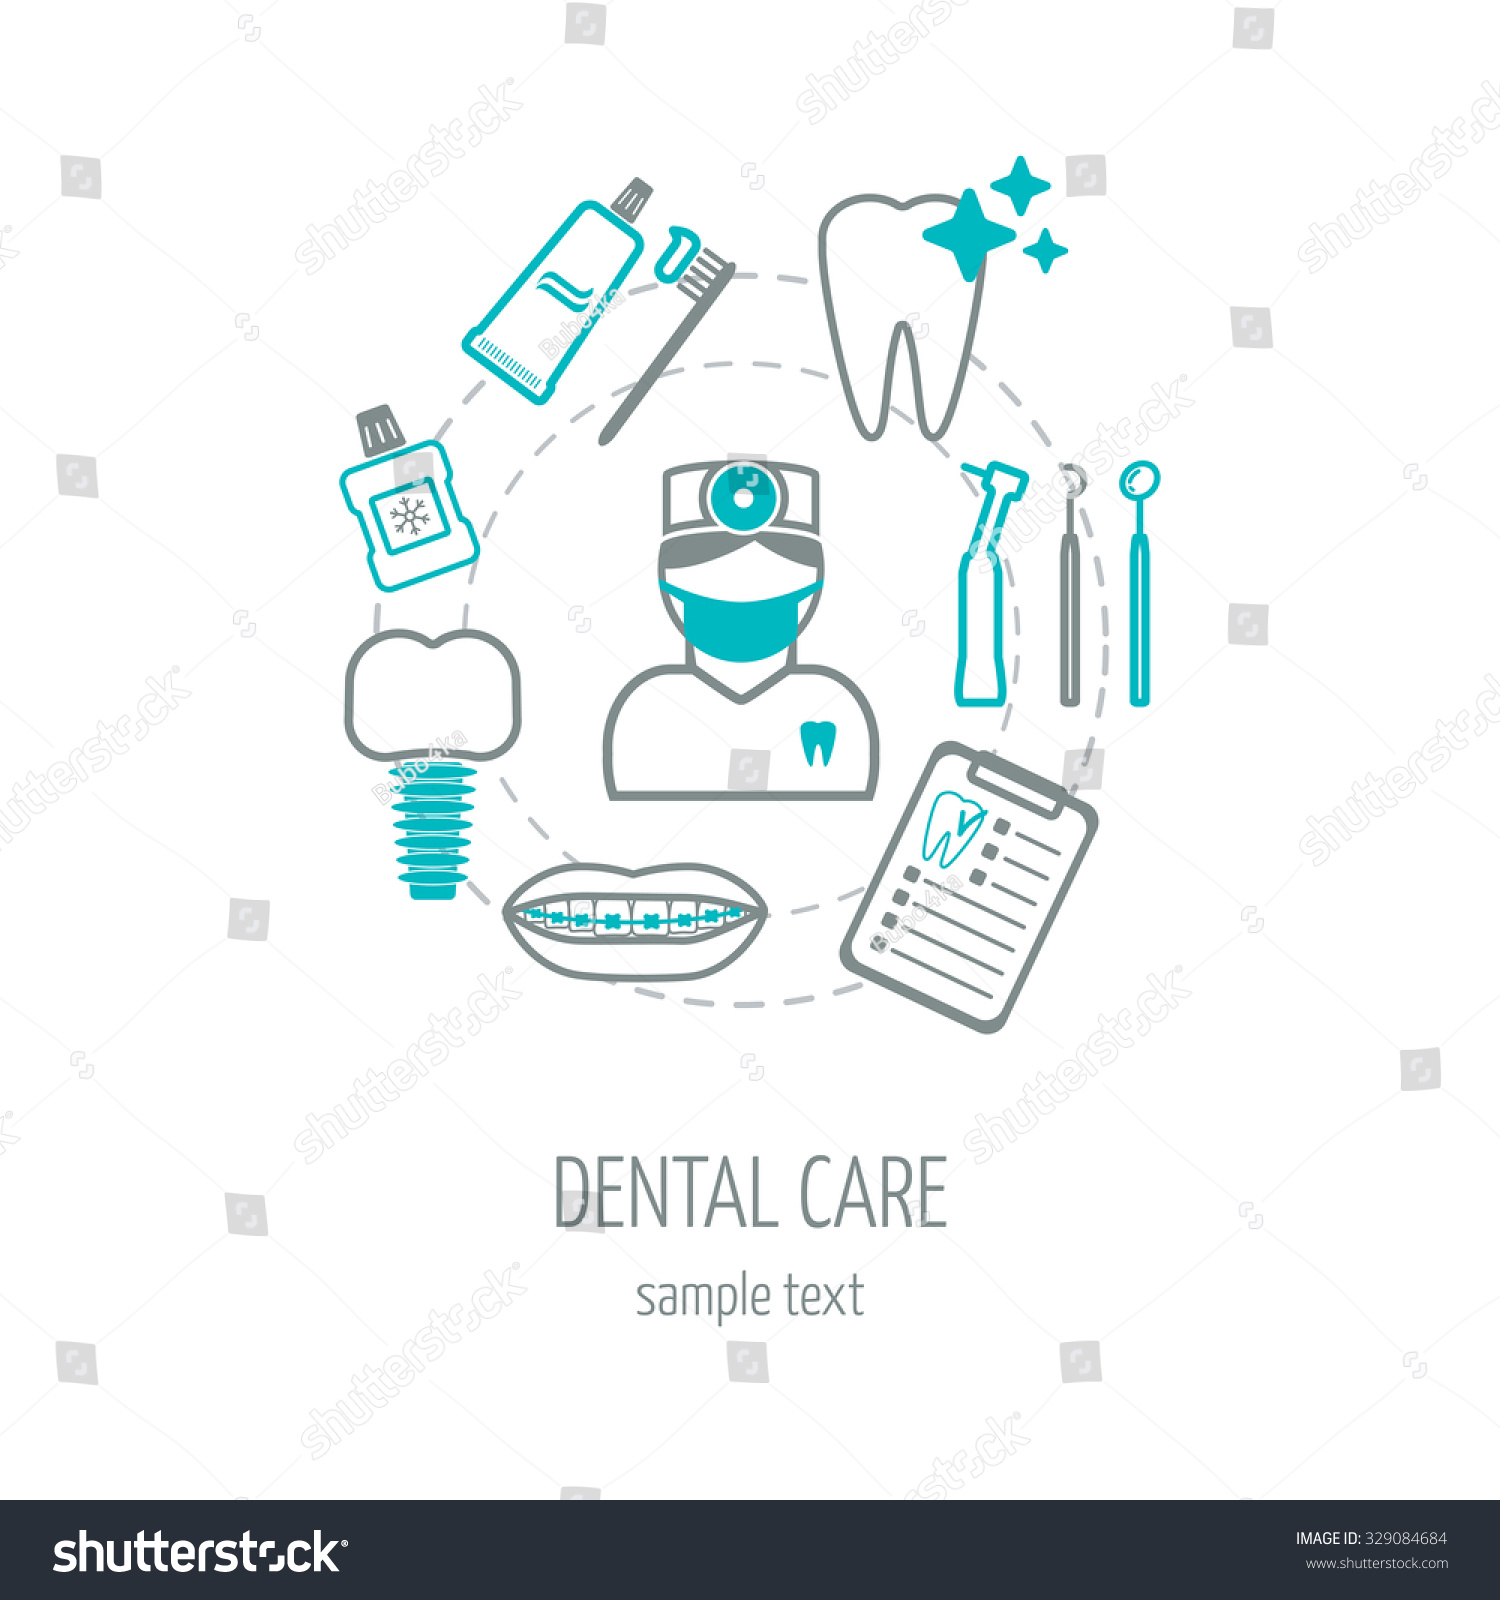 stock-vector-dental-clinic-banner-background-poster-concept-dental-care-flat-design-vector-illustration-329084684.jpg